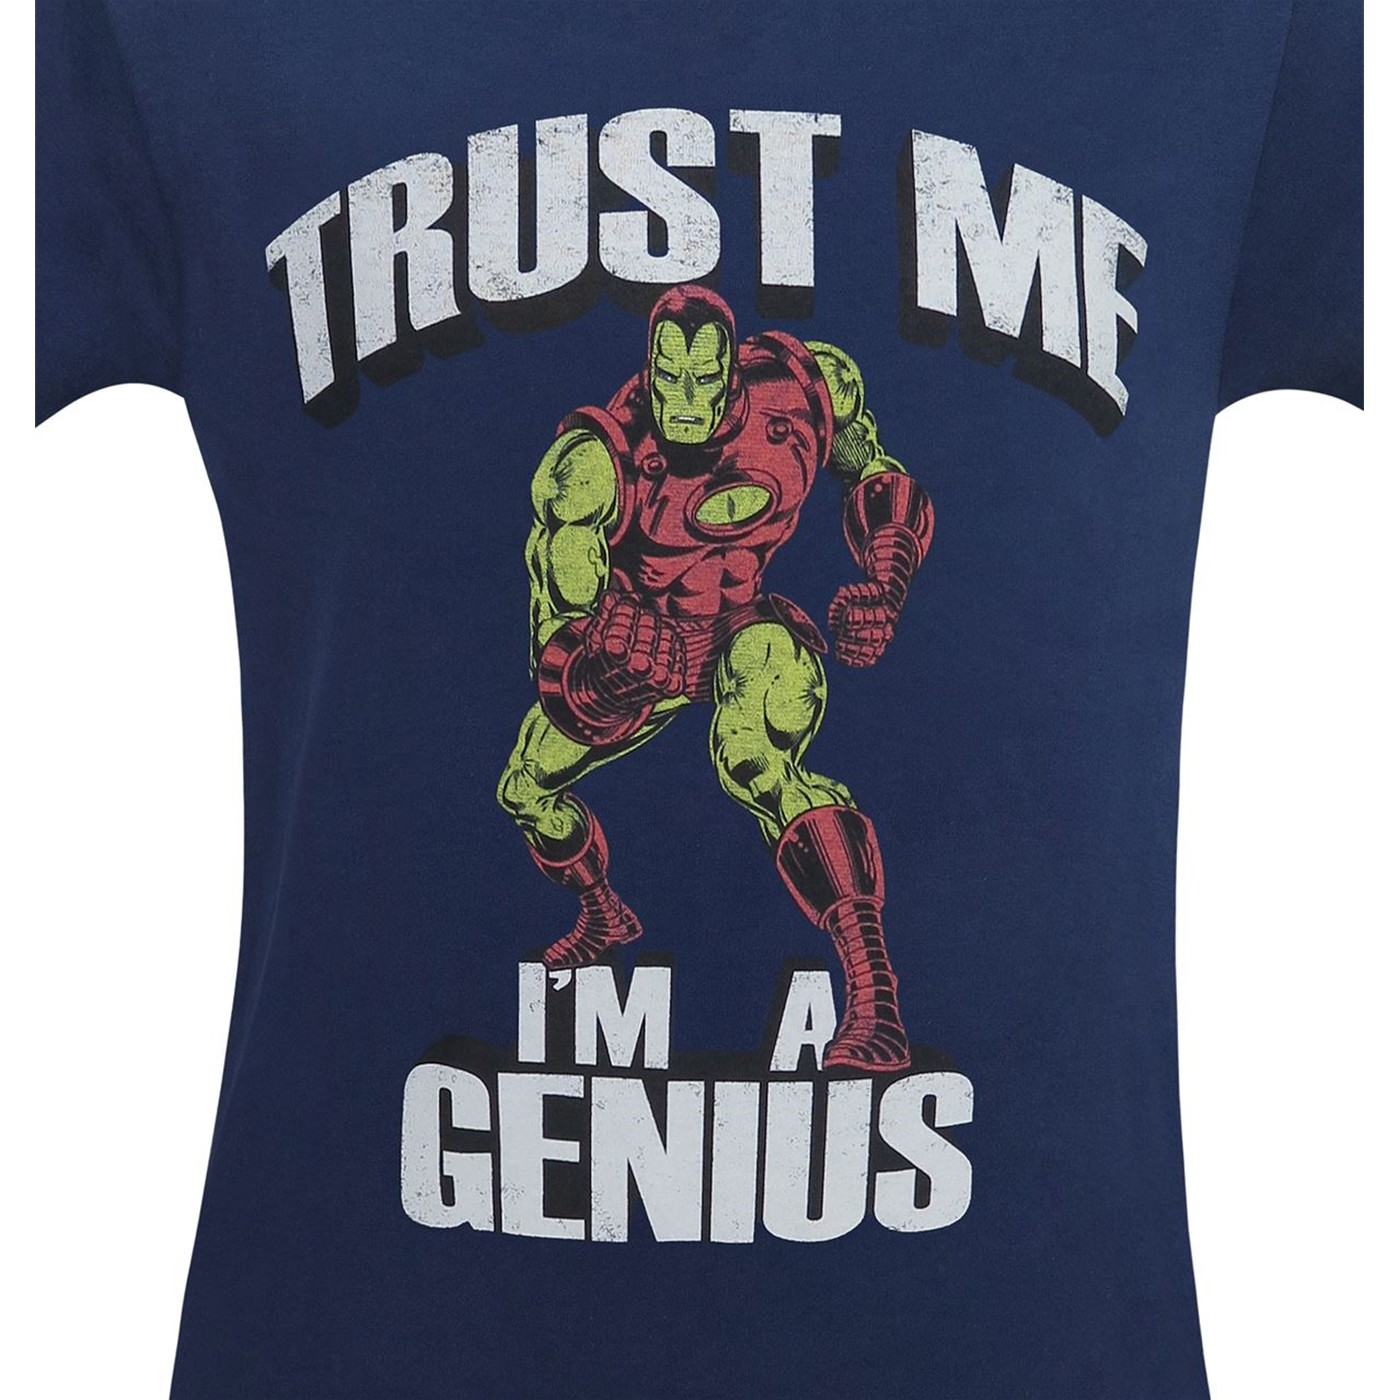 Iron Man Trust Me I'm A Genius Men's T-Shirt